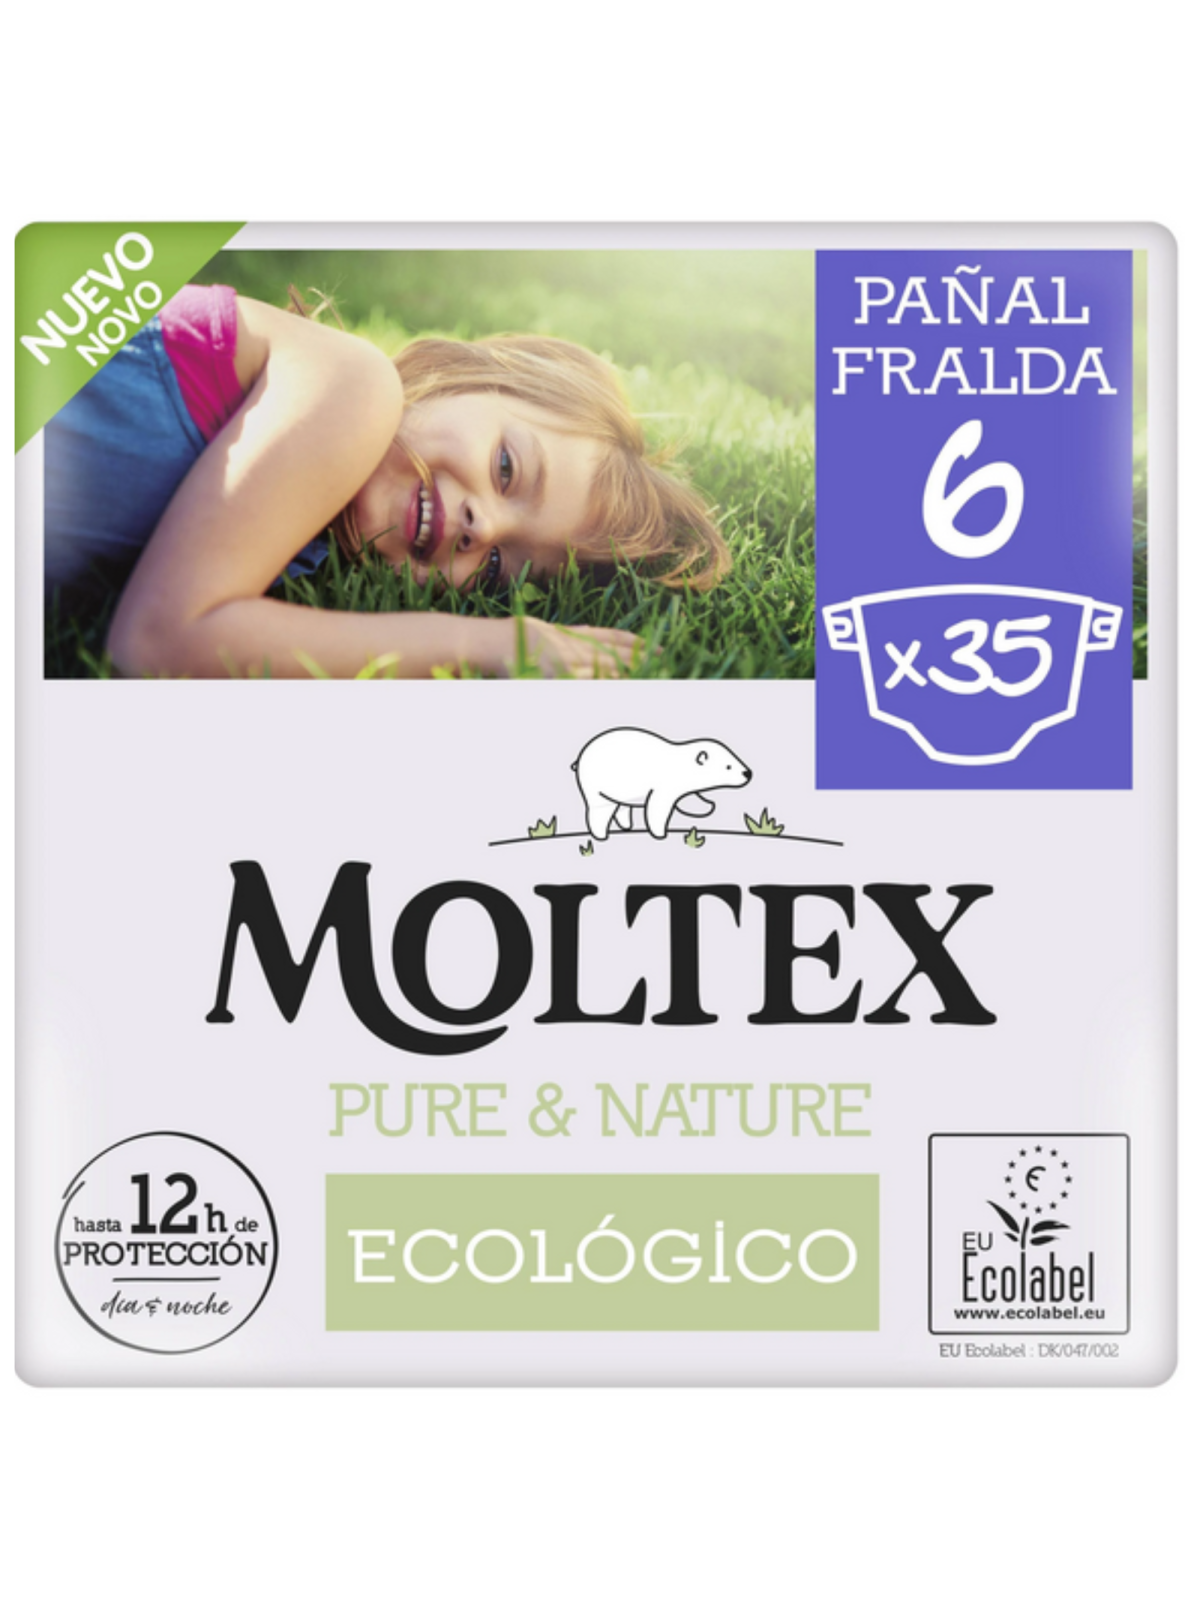 Moltex Pure Nature Pañales infantiles ecológicos Talla 6 (17-28 kg) Paquete 35 unidades